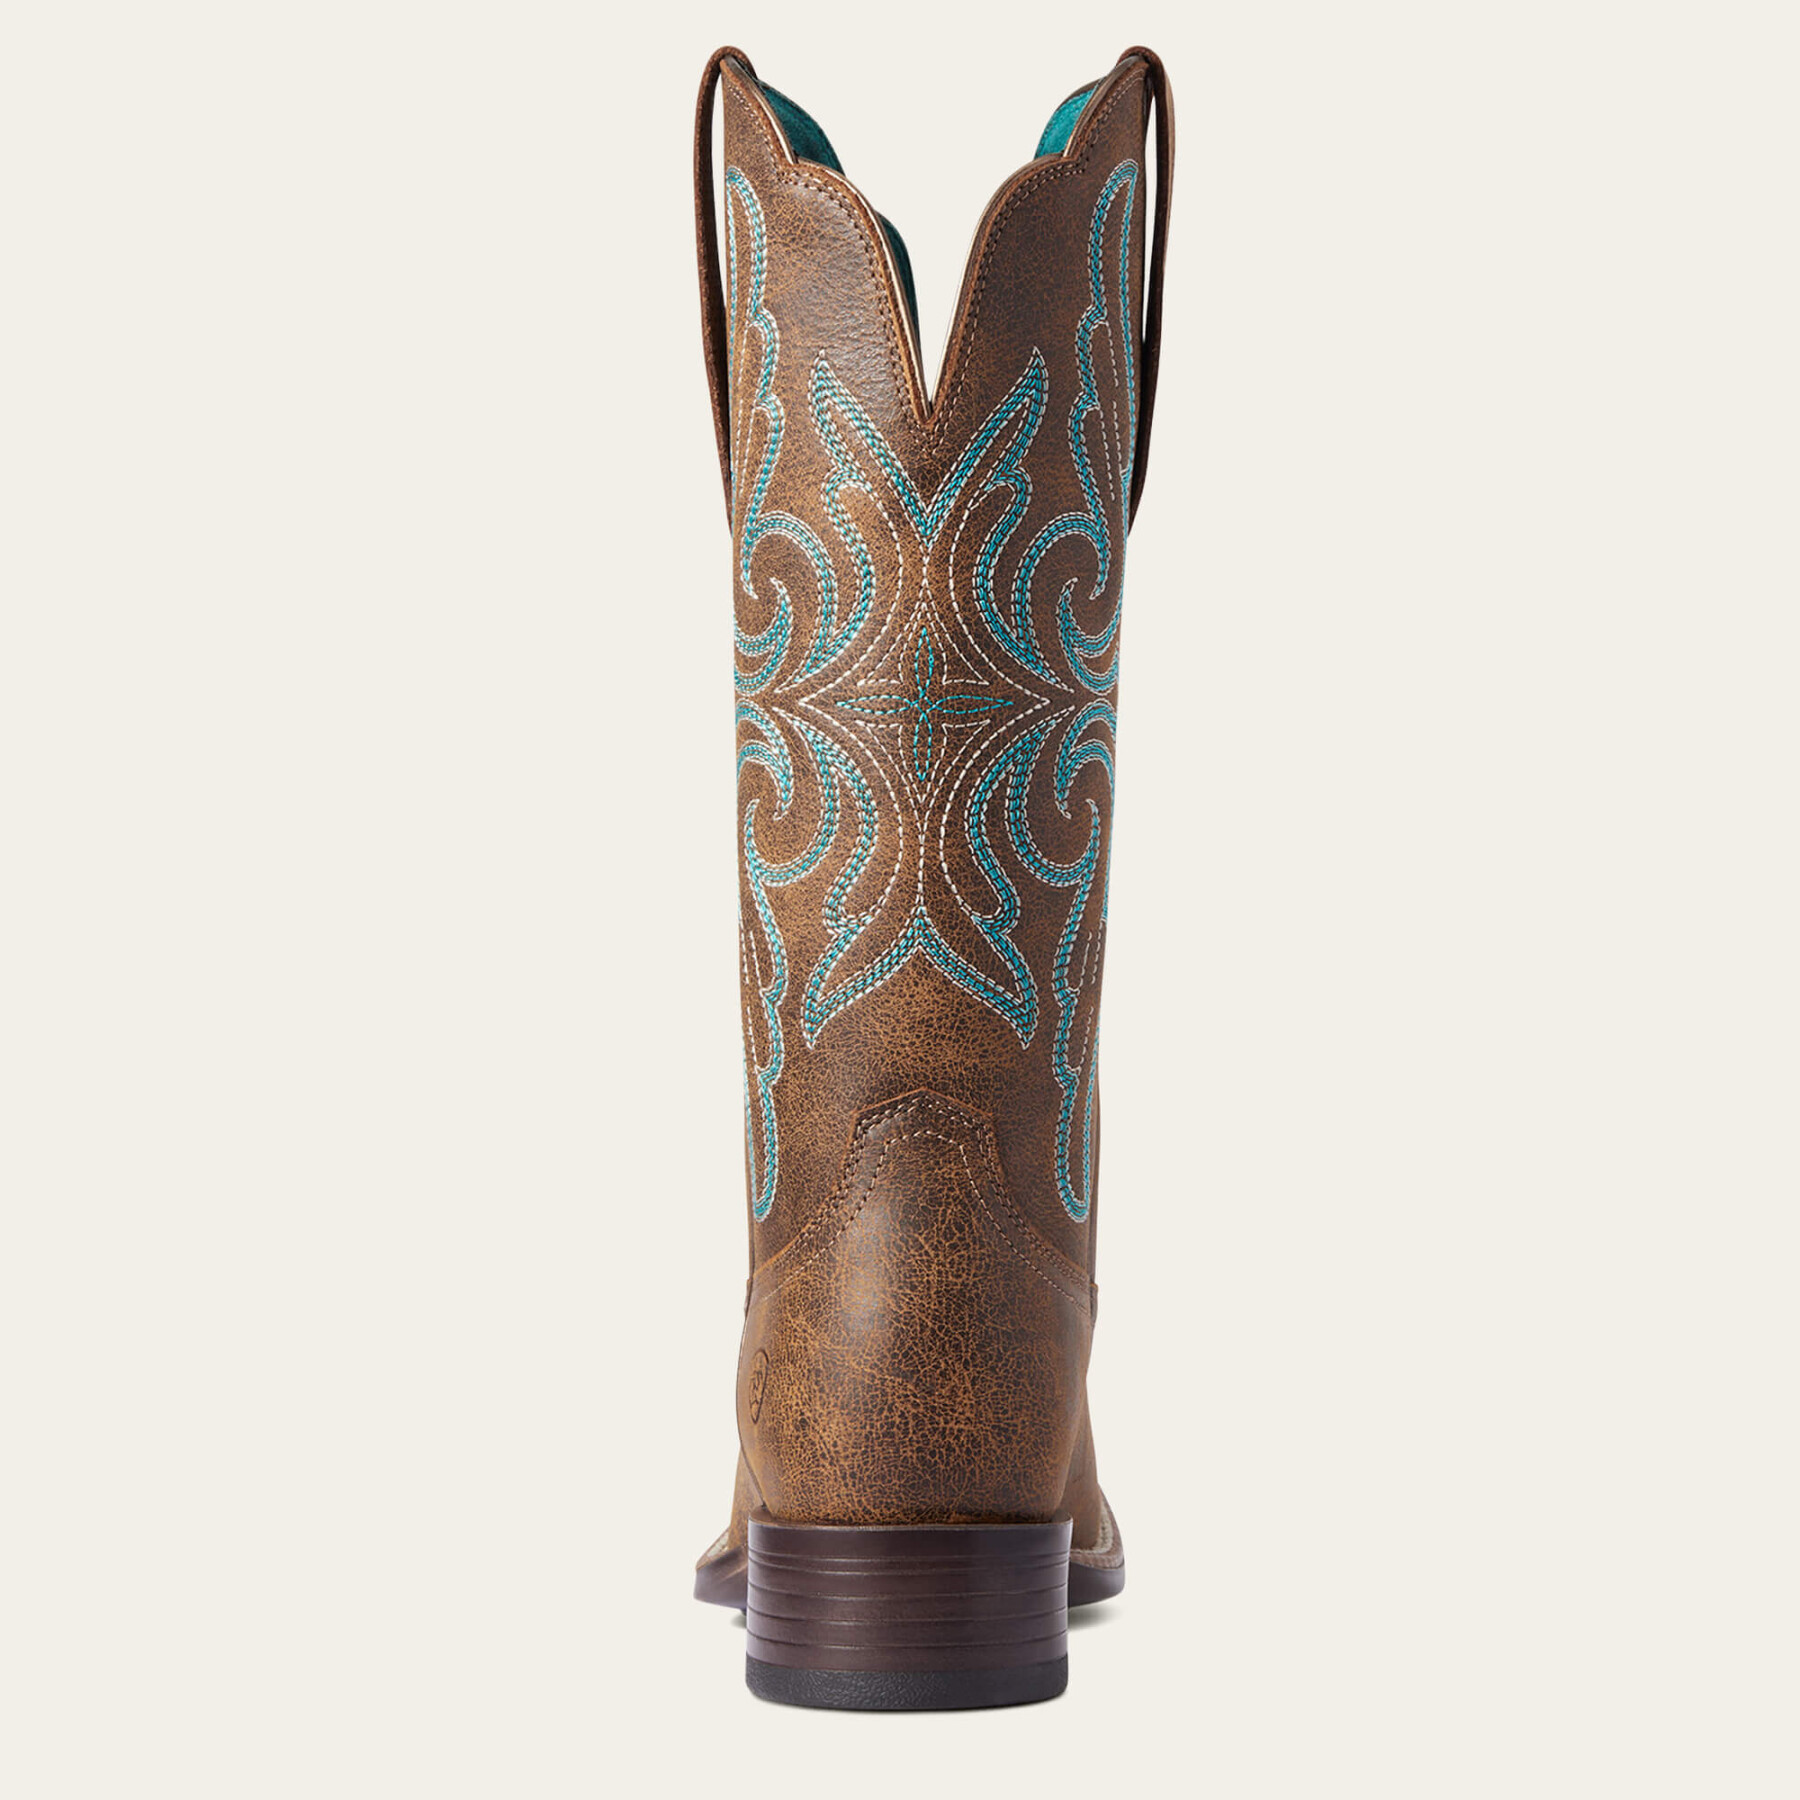 Women's leather western boots Ariat Primera StretchFit